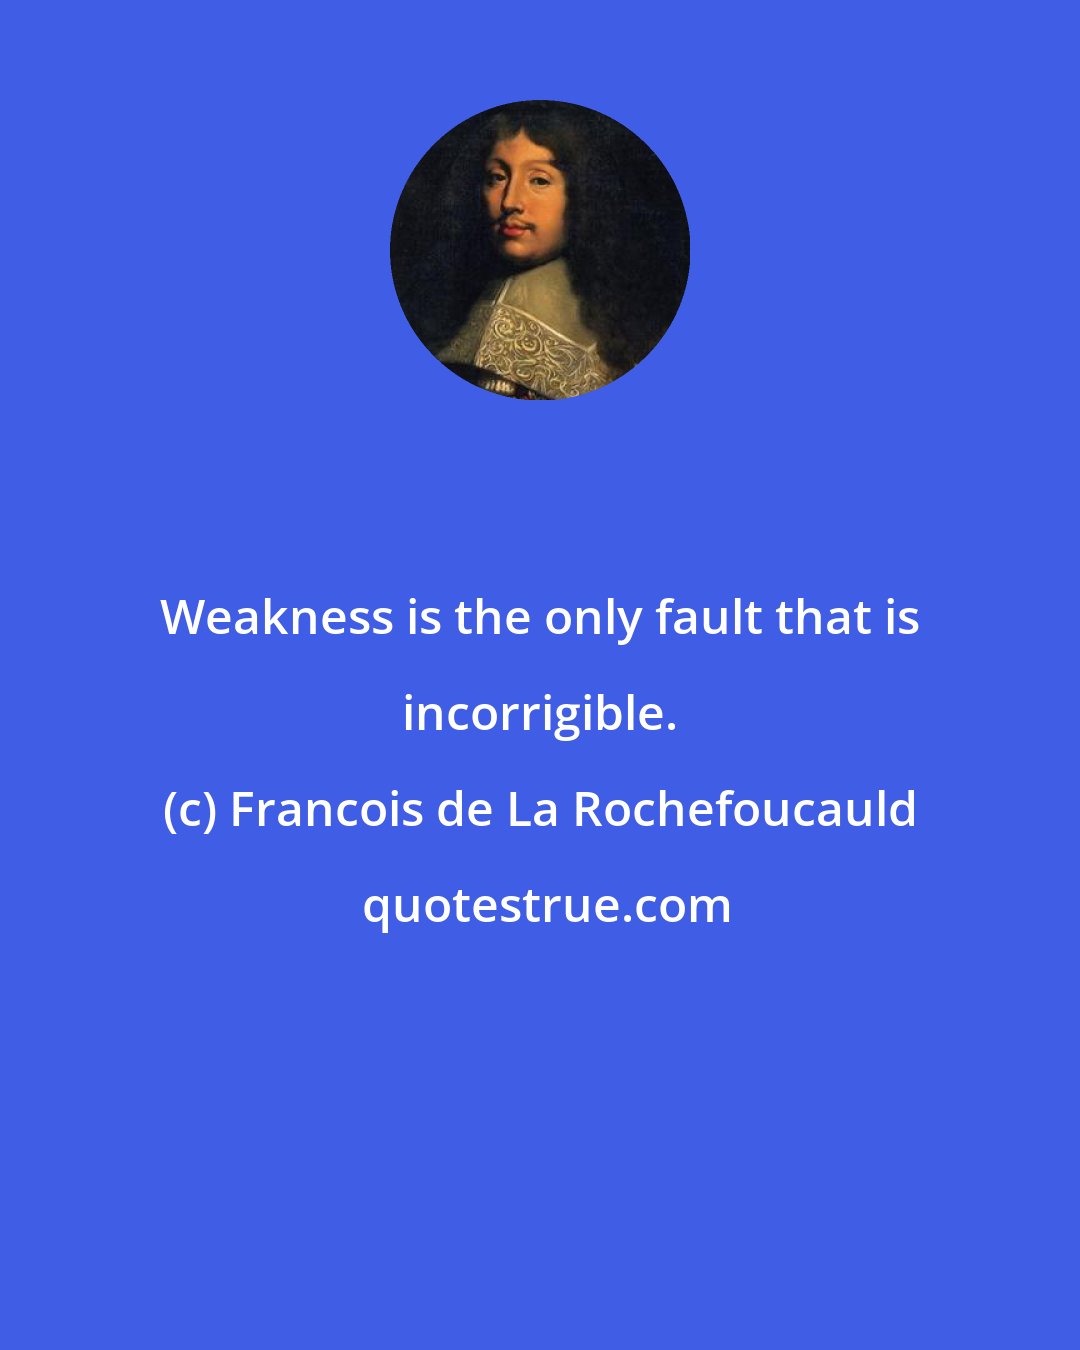 Francois de La Rochefoucauld: Weakness is the only fault that is incorrigible.